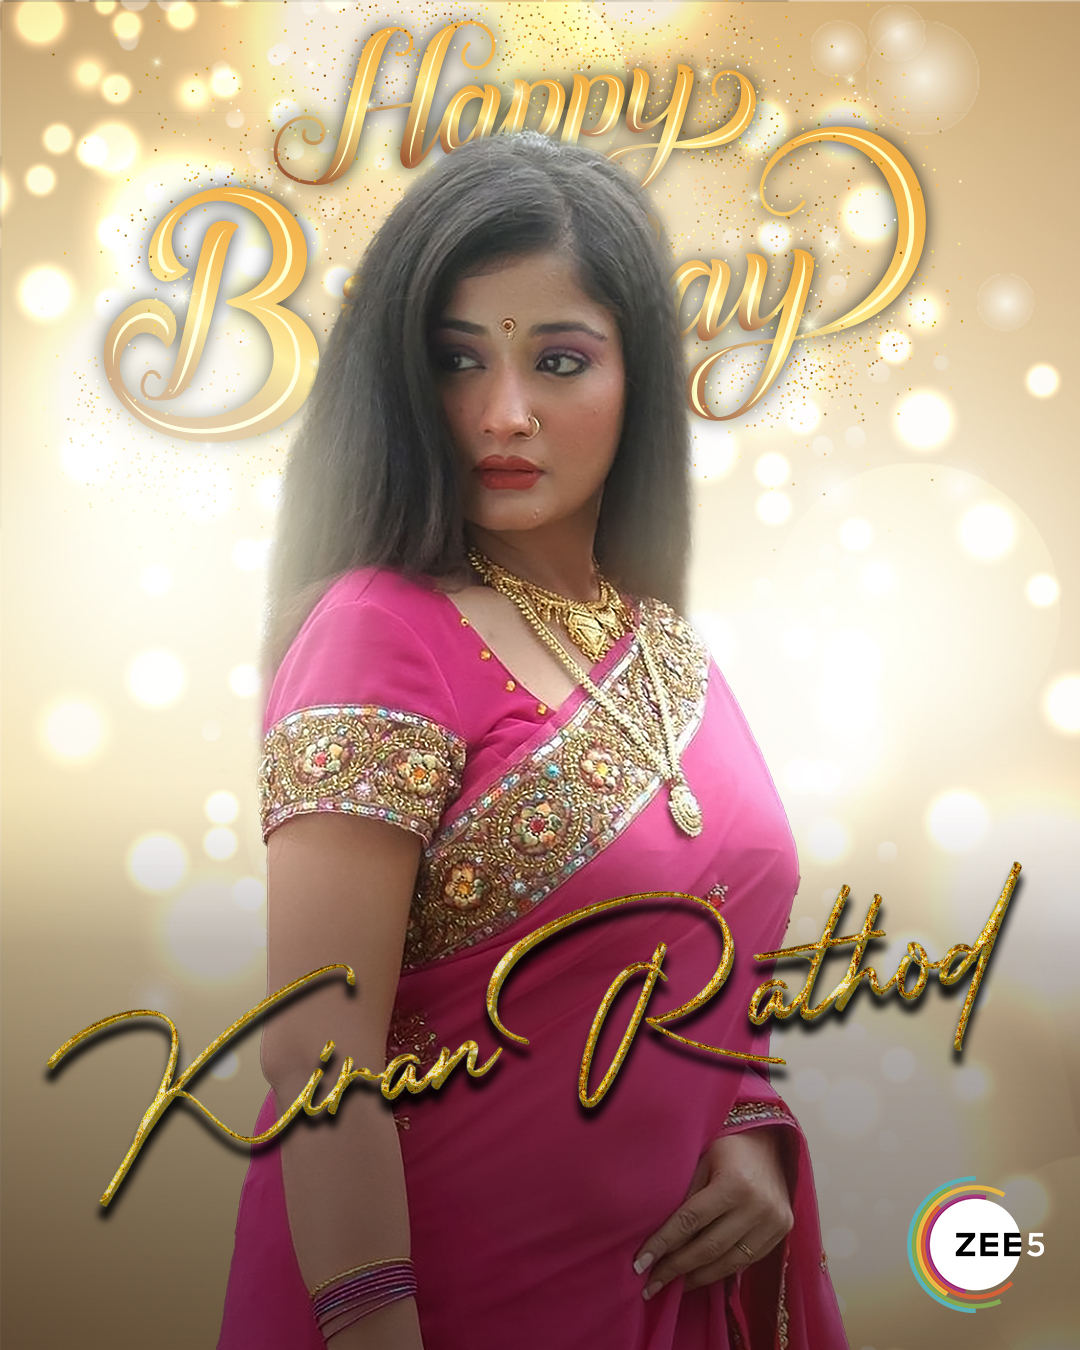 Wishing a very very Happy Birthday Kiran Rathod....   .    